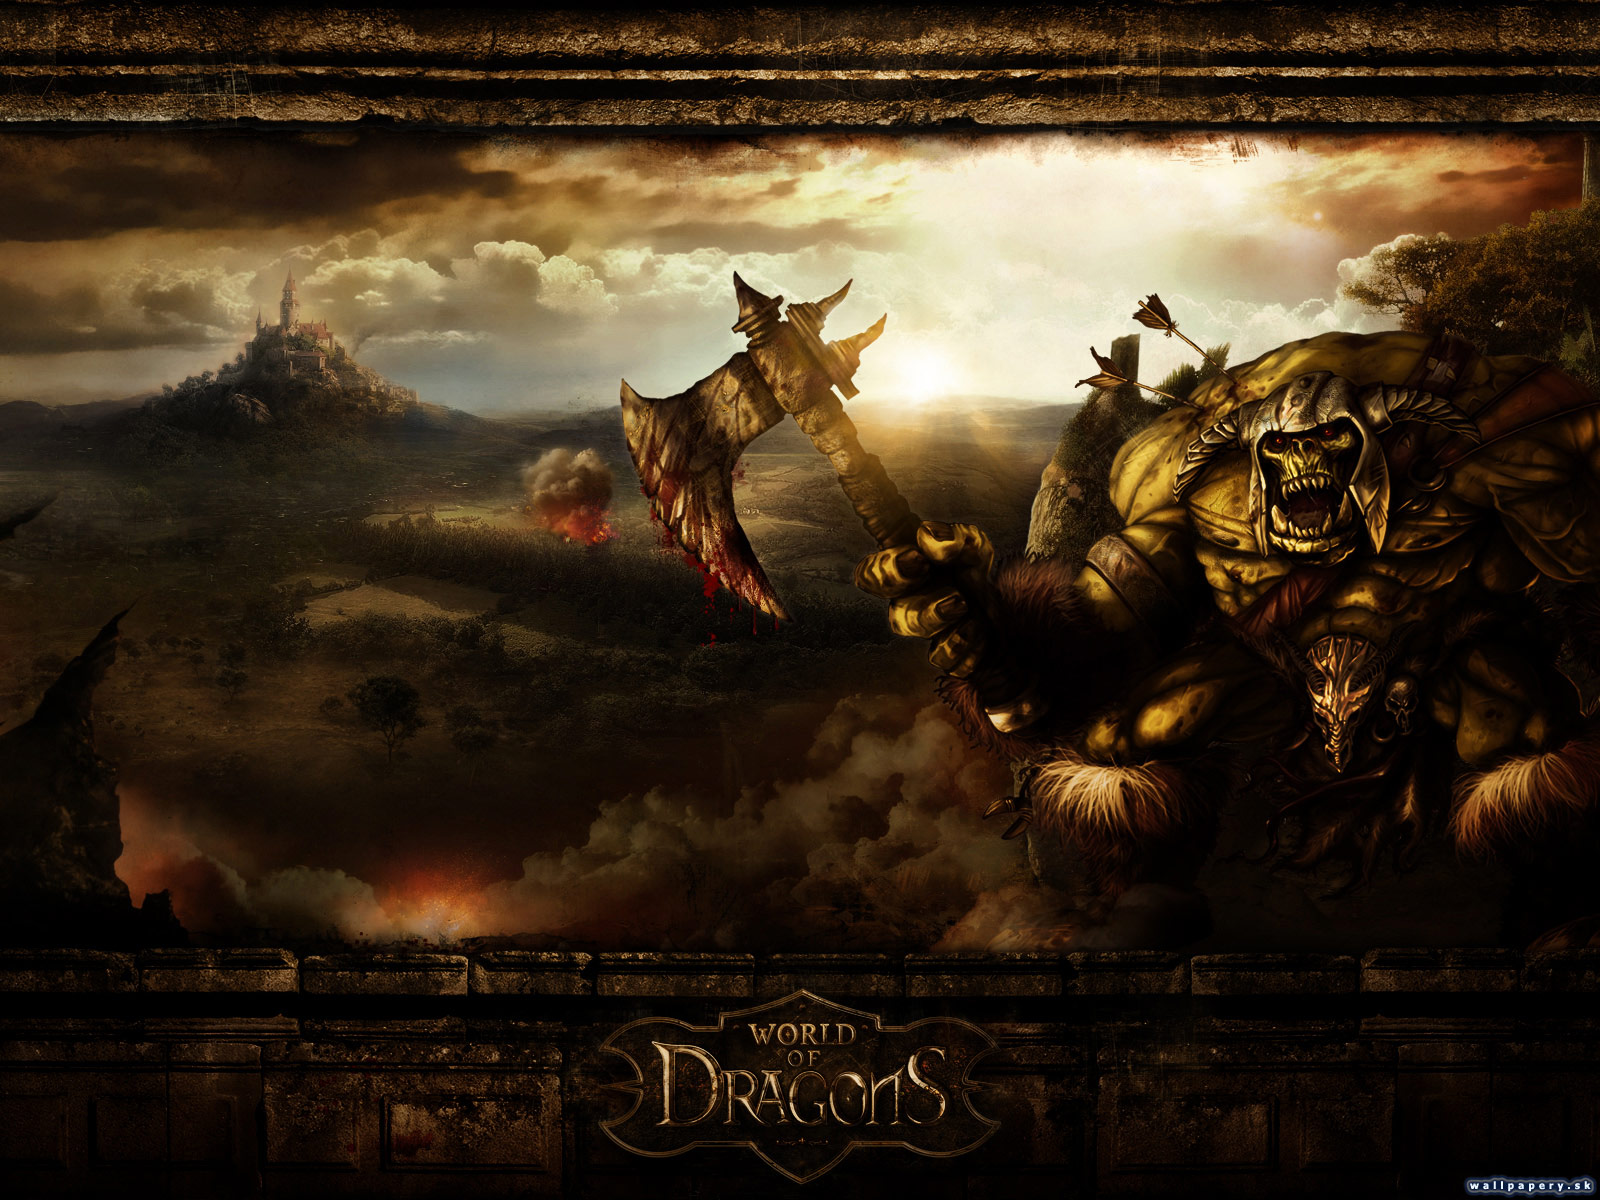 World of Dragons - wallpaper 3